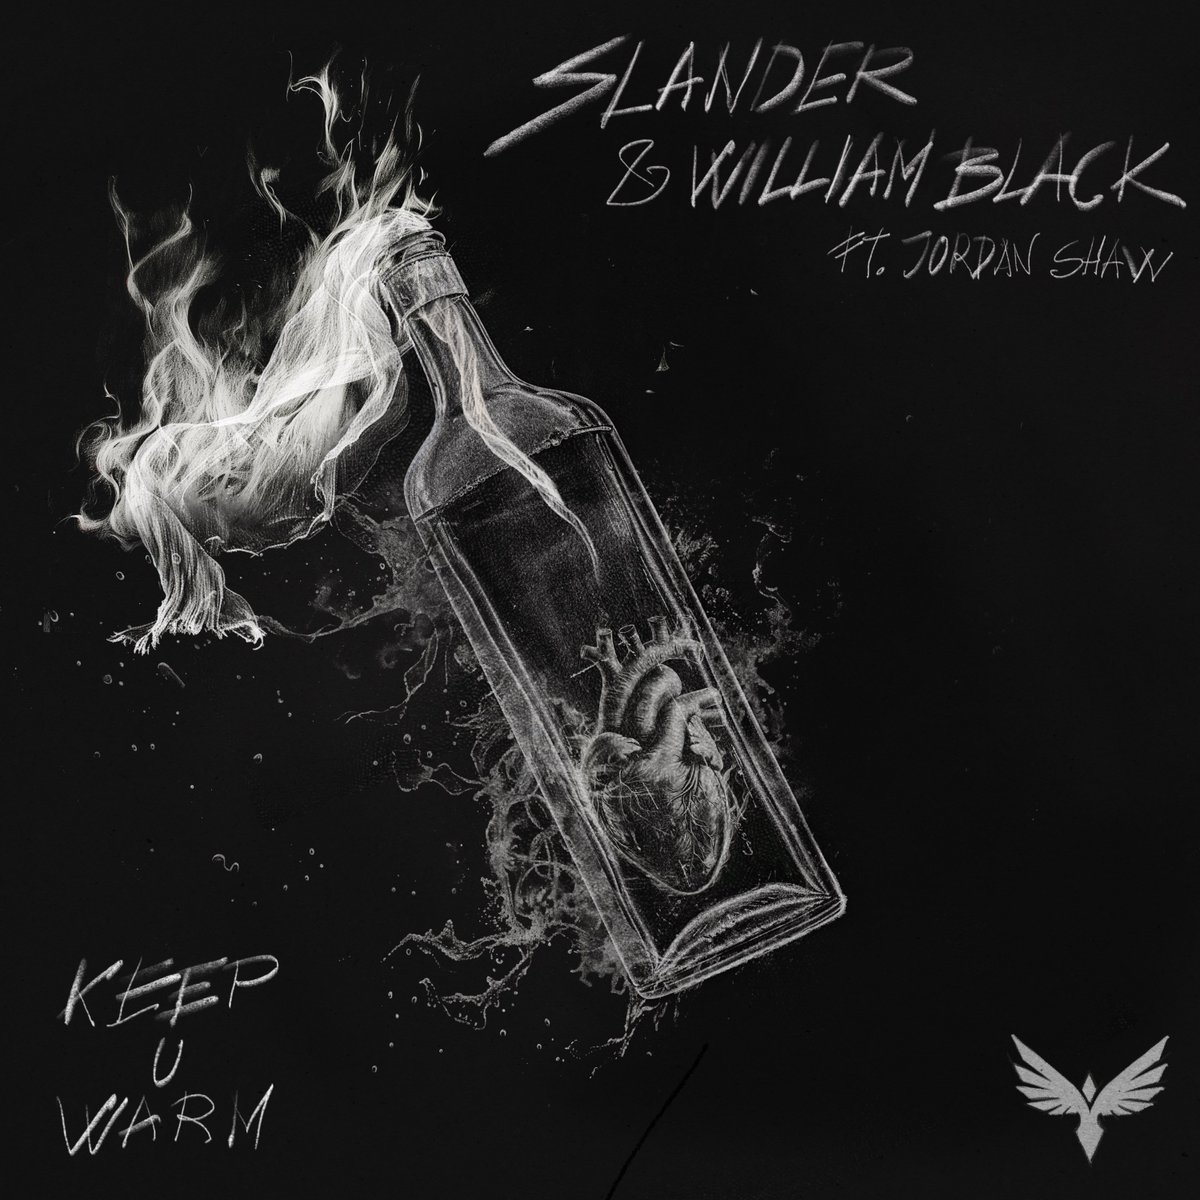 SLANDER & WILLIAM BLACK KEEP U WARM FT. JORDAN SHAW OUT TONIGHT!!!! ❤️‍🔥